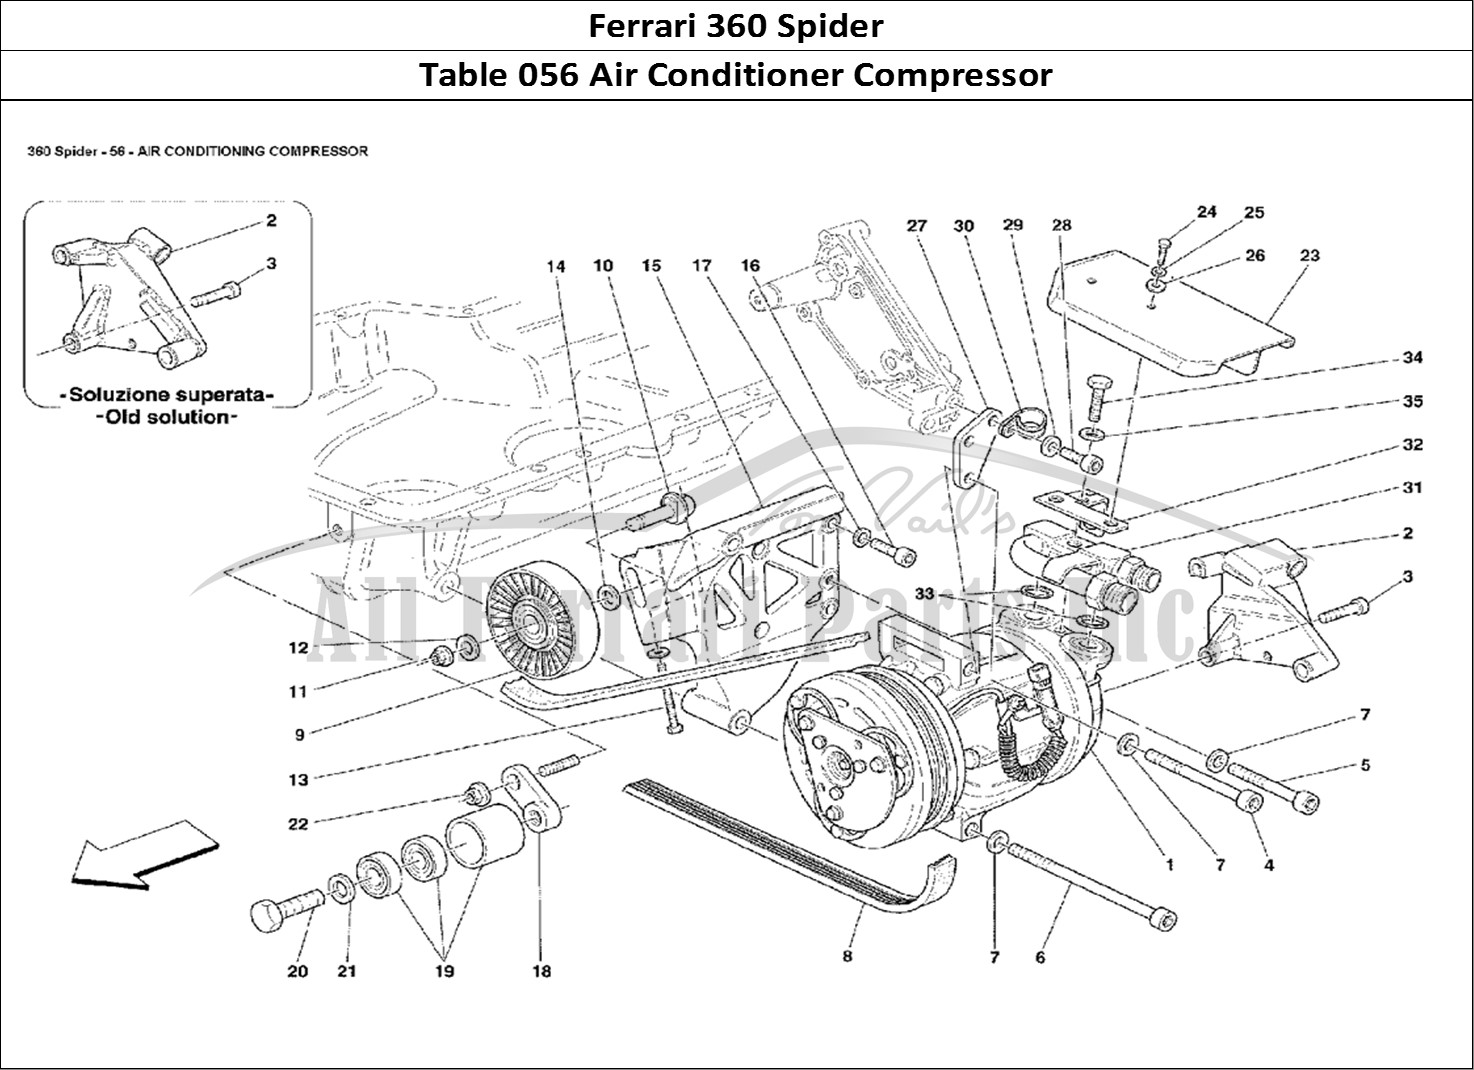 Ferrari Parts Ferrari 360 Spider Page 056 Air Conditioning Compress